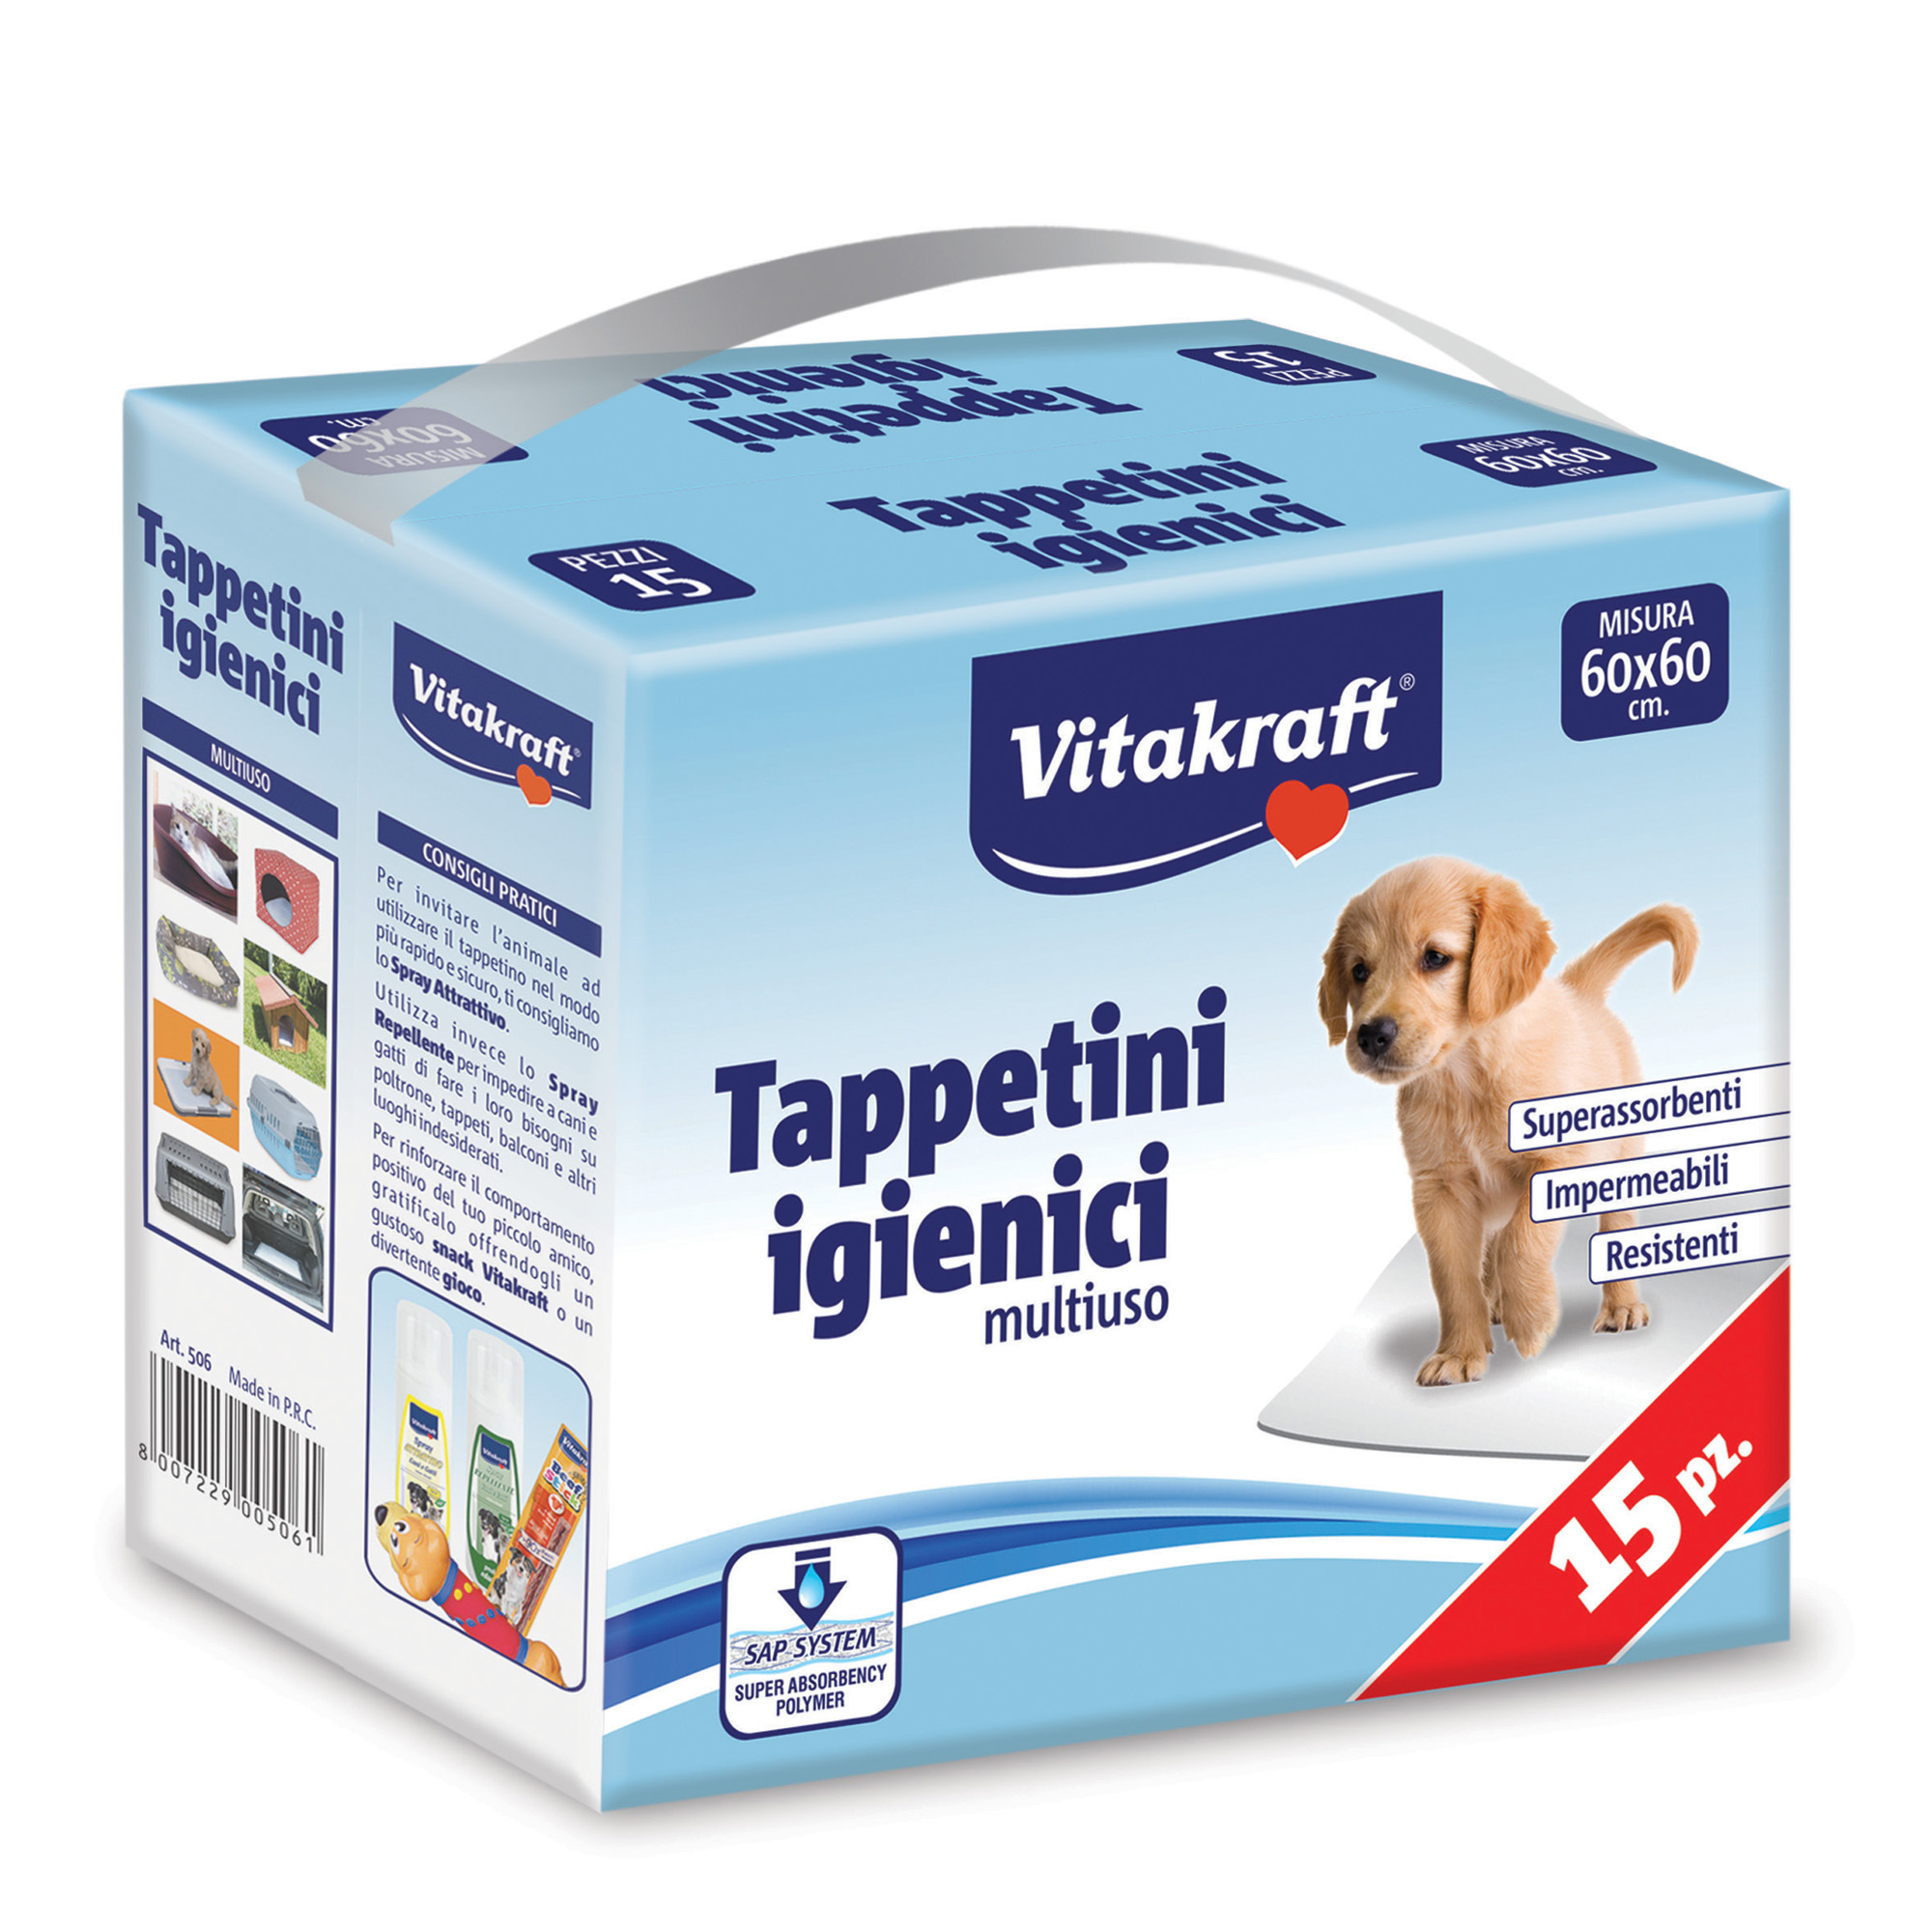 Tappetini igienici multiuso per cani e gatti - 60 x 60 cm - Vitakraft - conf. 15 pezzi